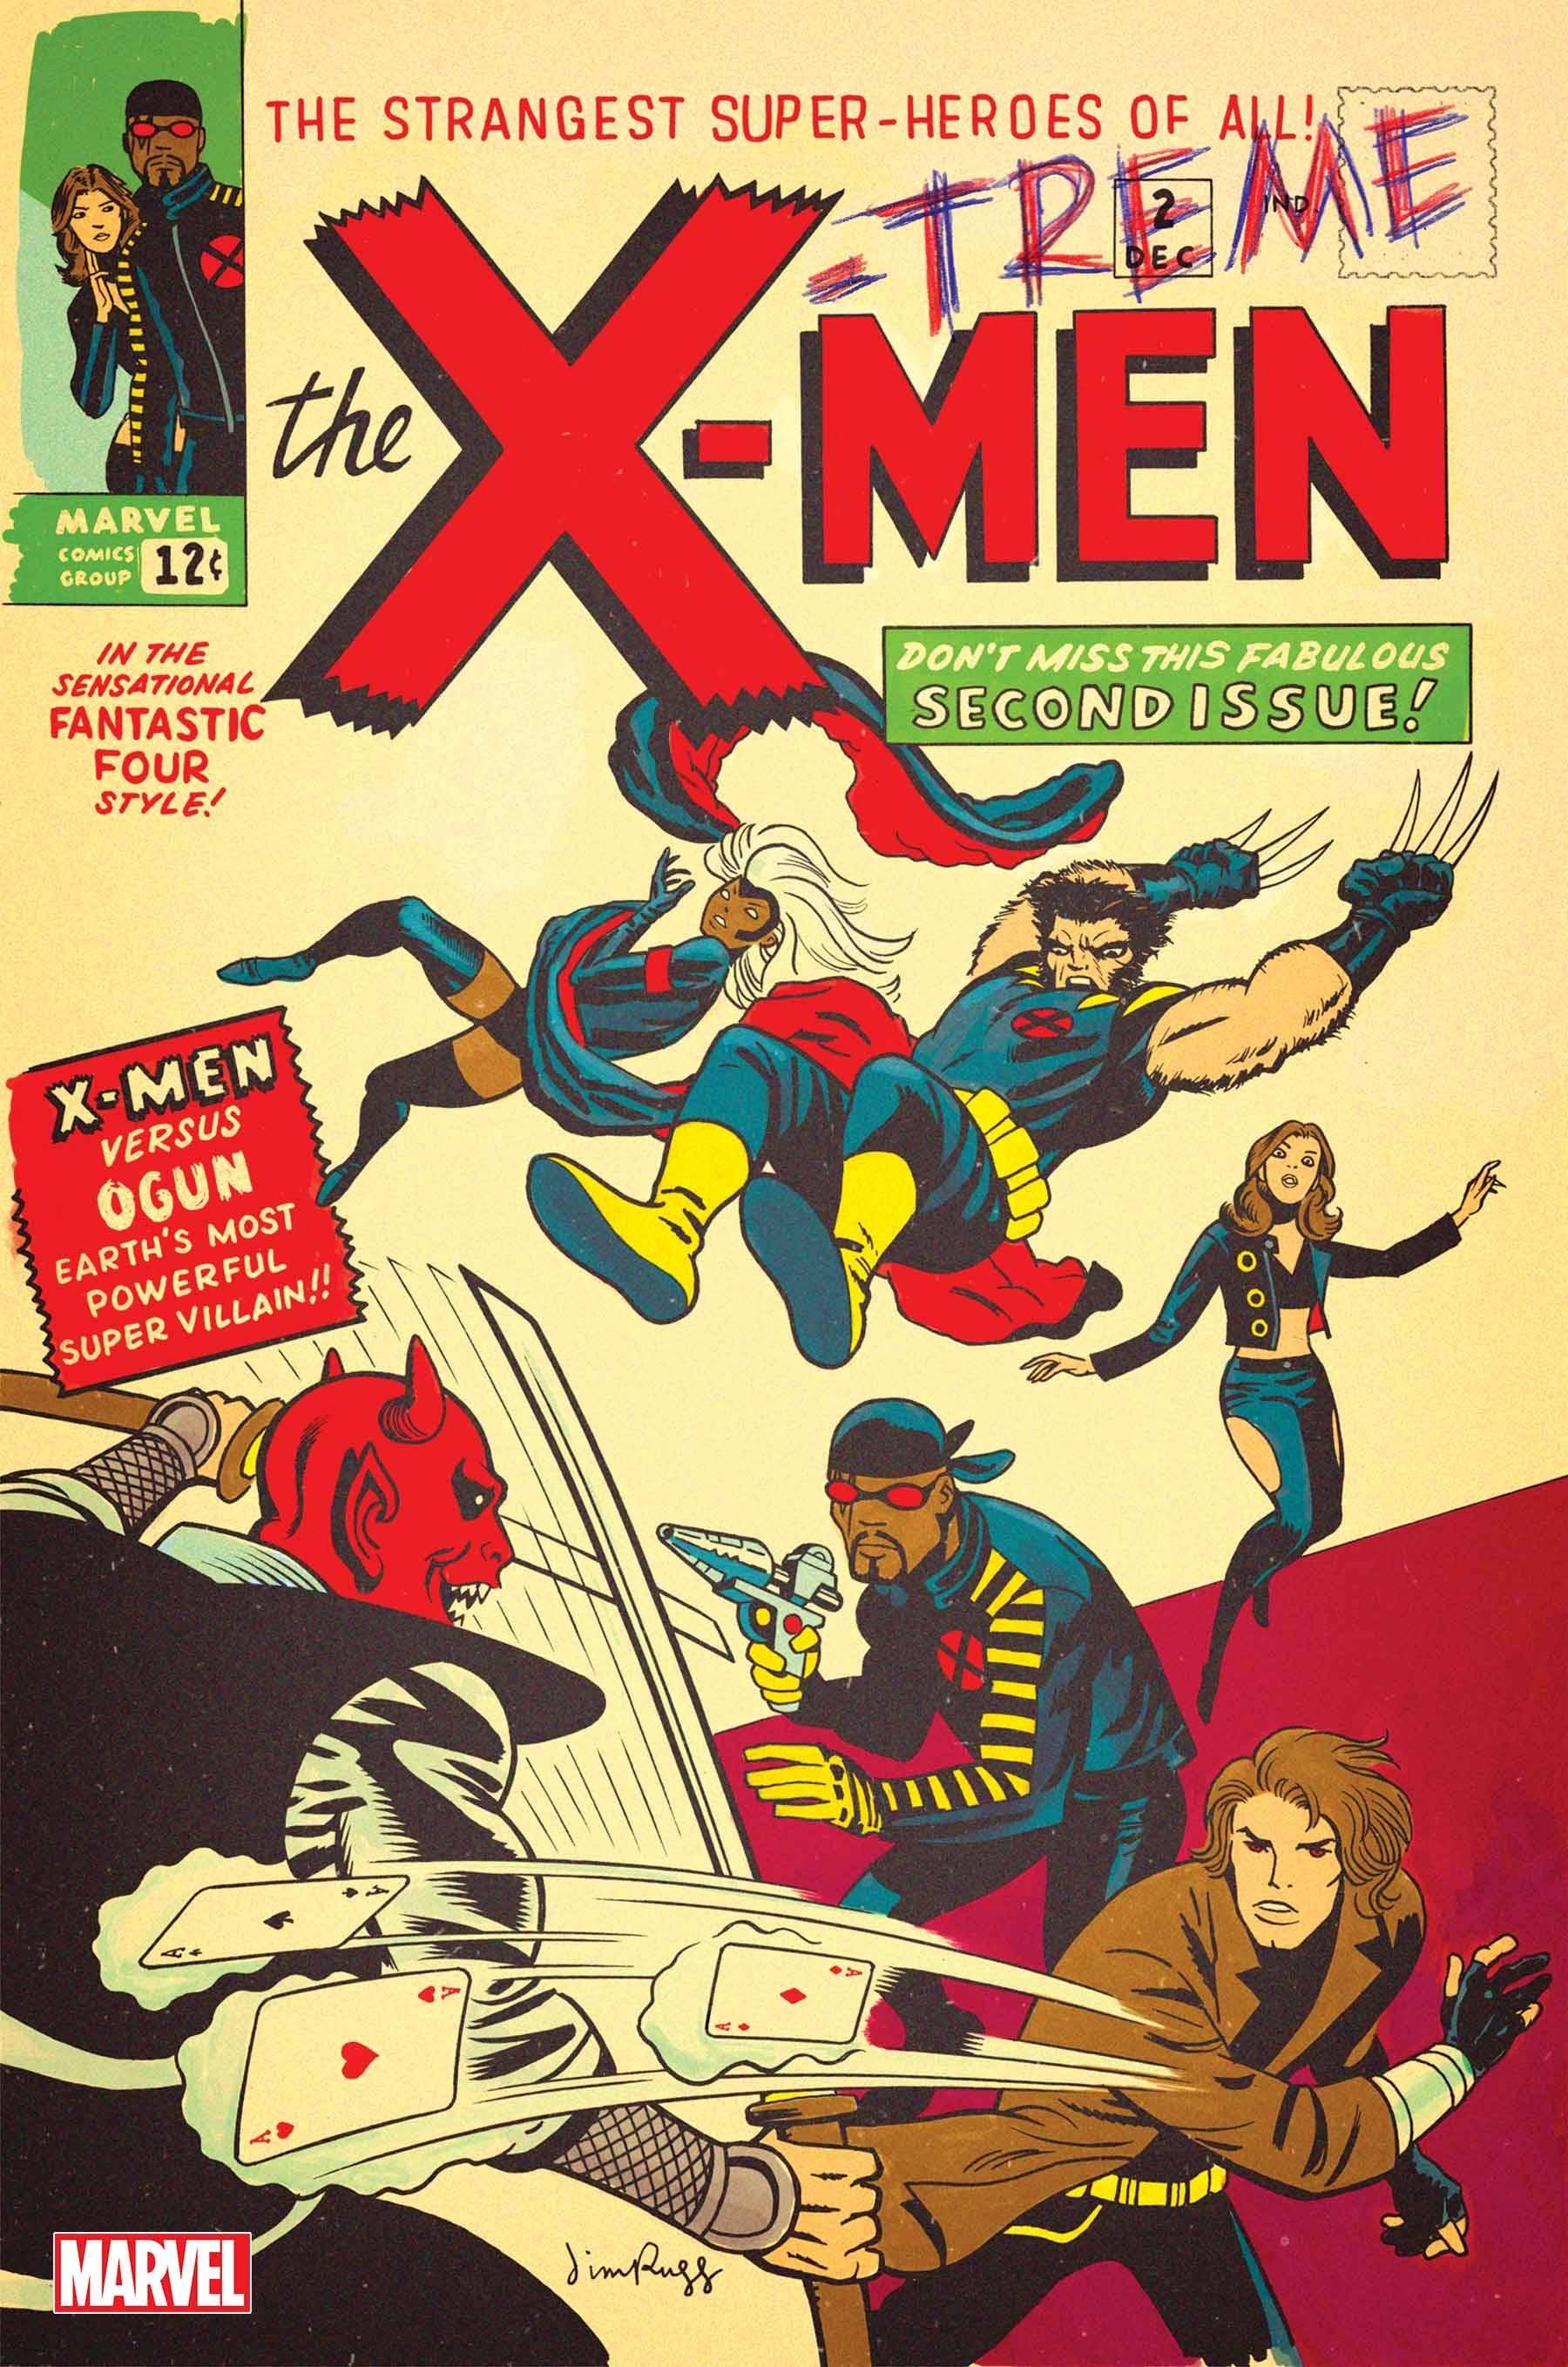 X-TREME X-MEN #2 (OF 5) RUGG HOMAGE VAR - HolyGrail Comix